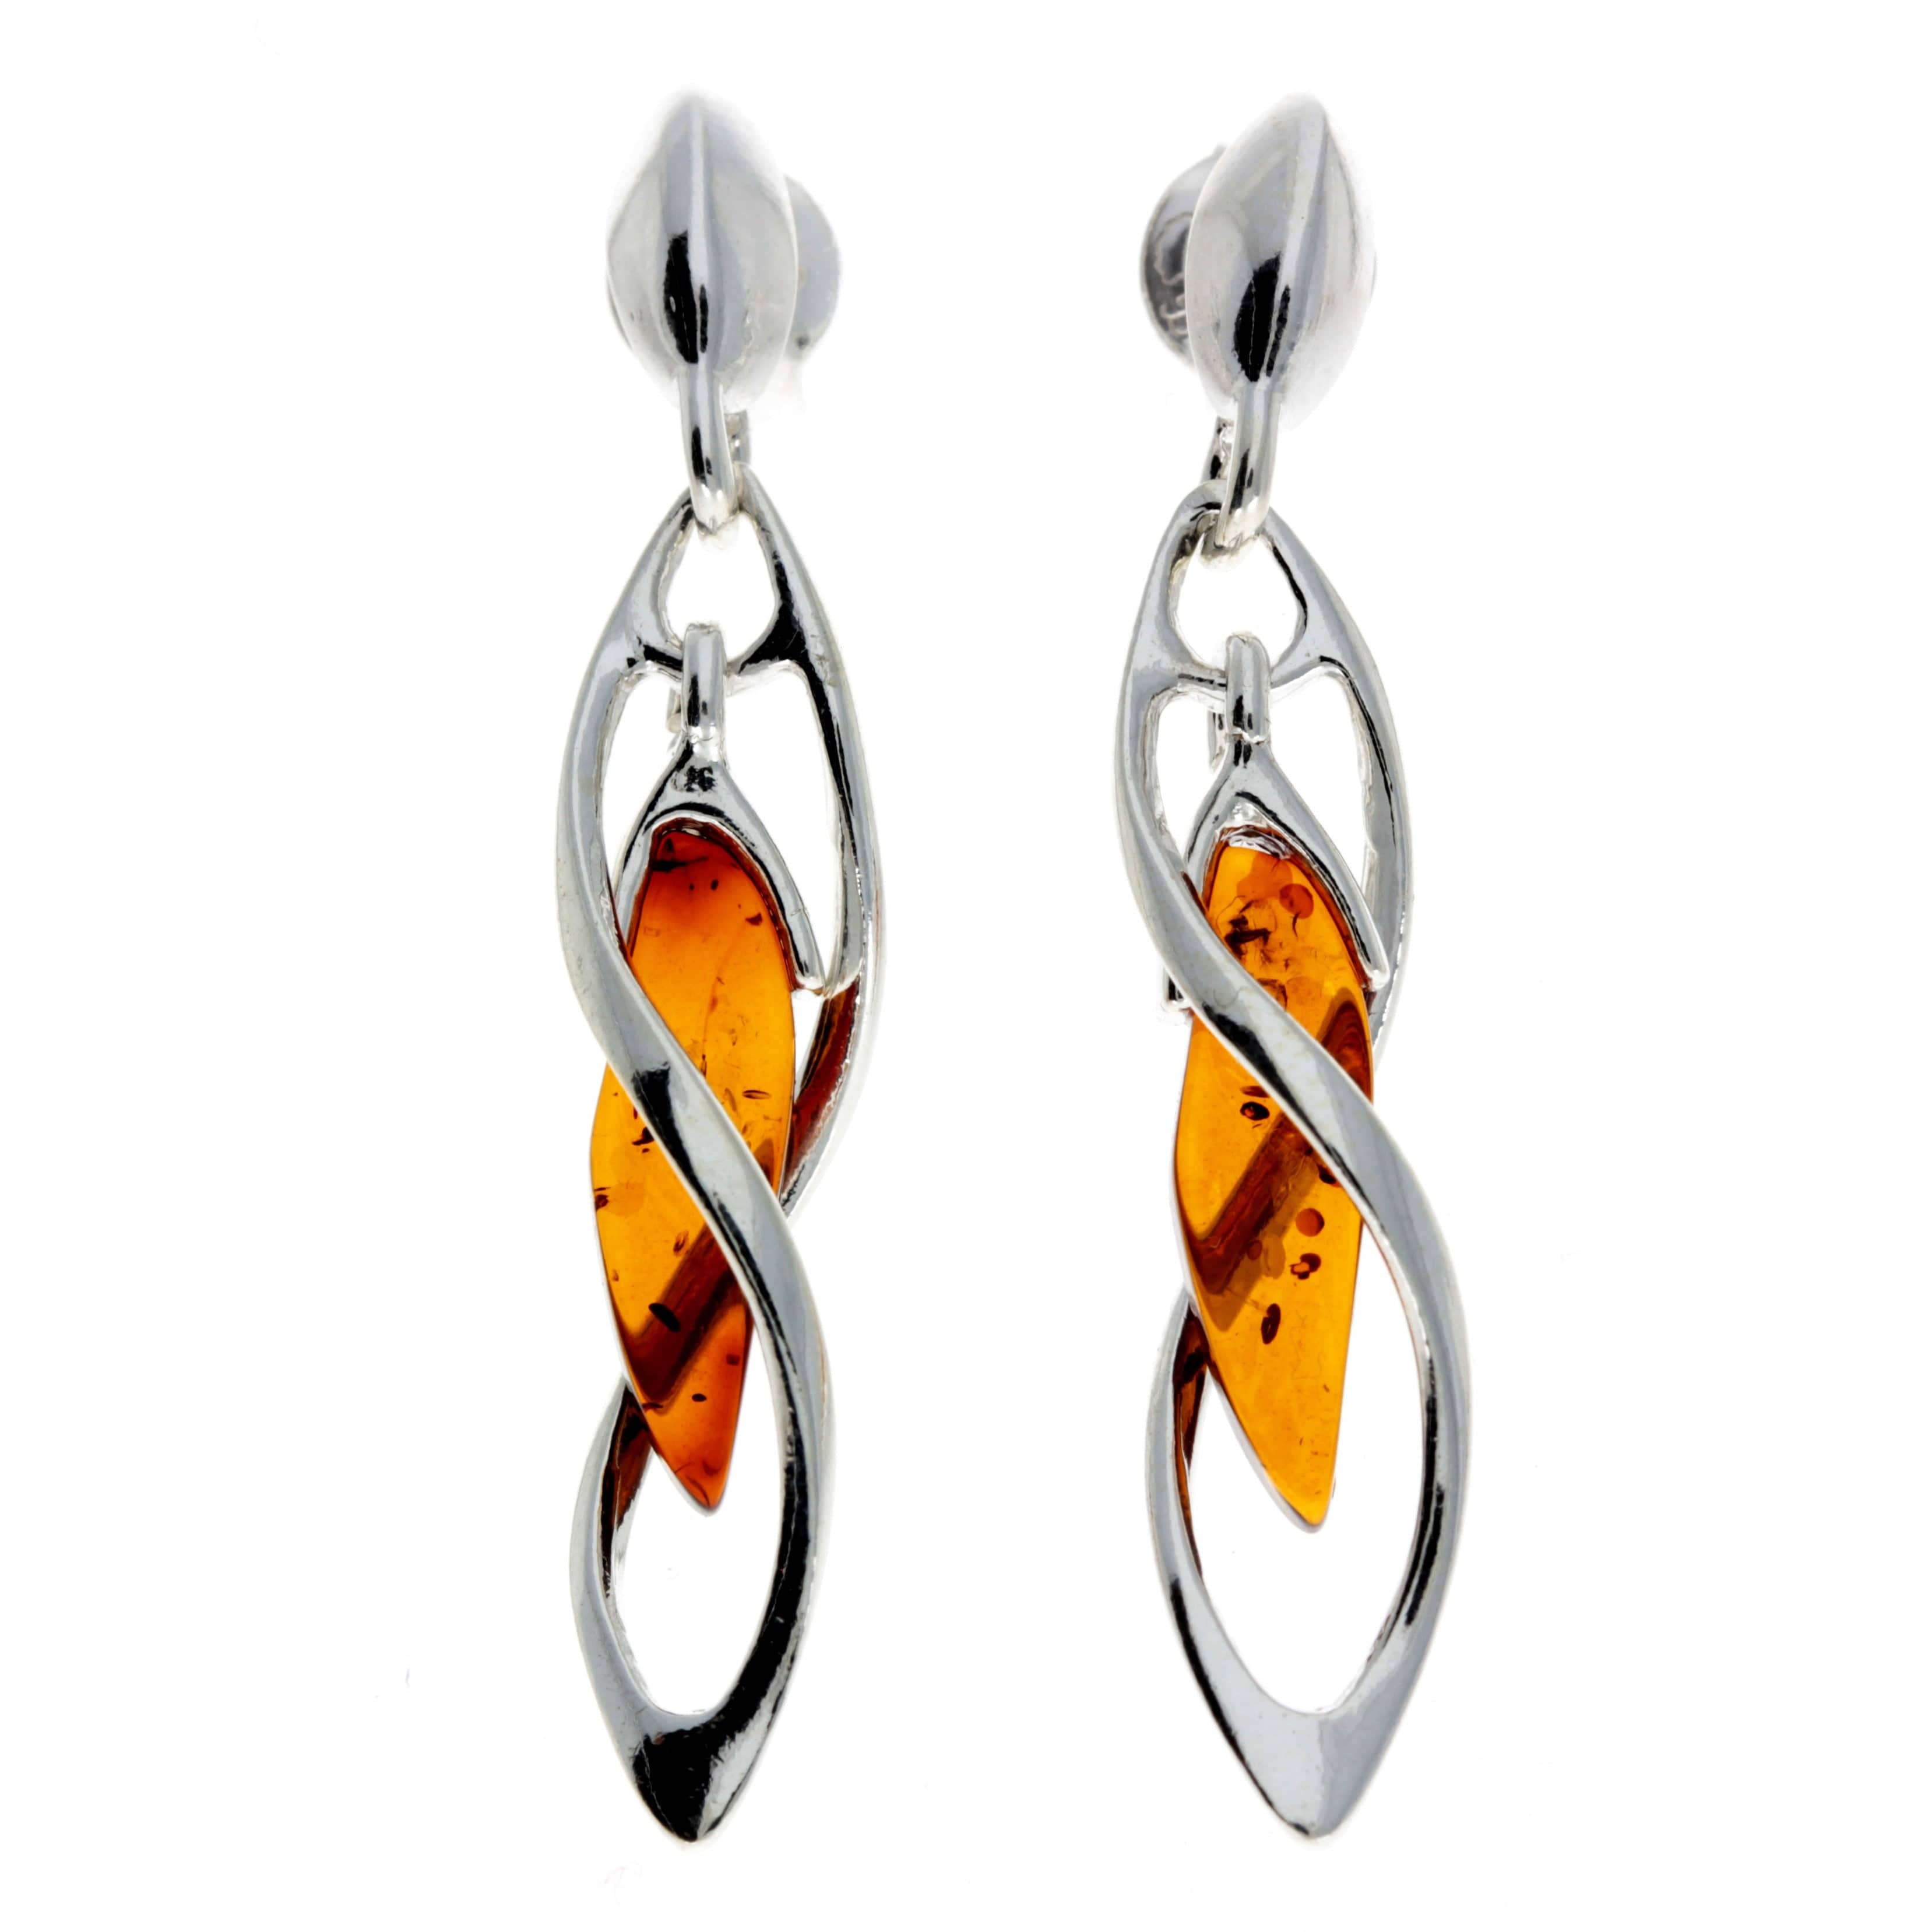 925 Sterling Silver & Genuine Baltic Amber Modern Drop Earrings - GL172